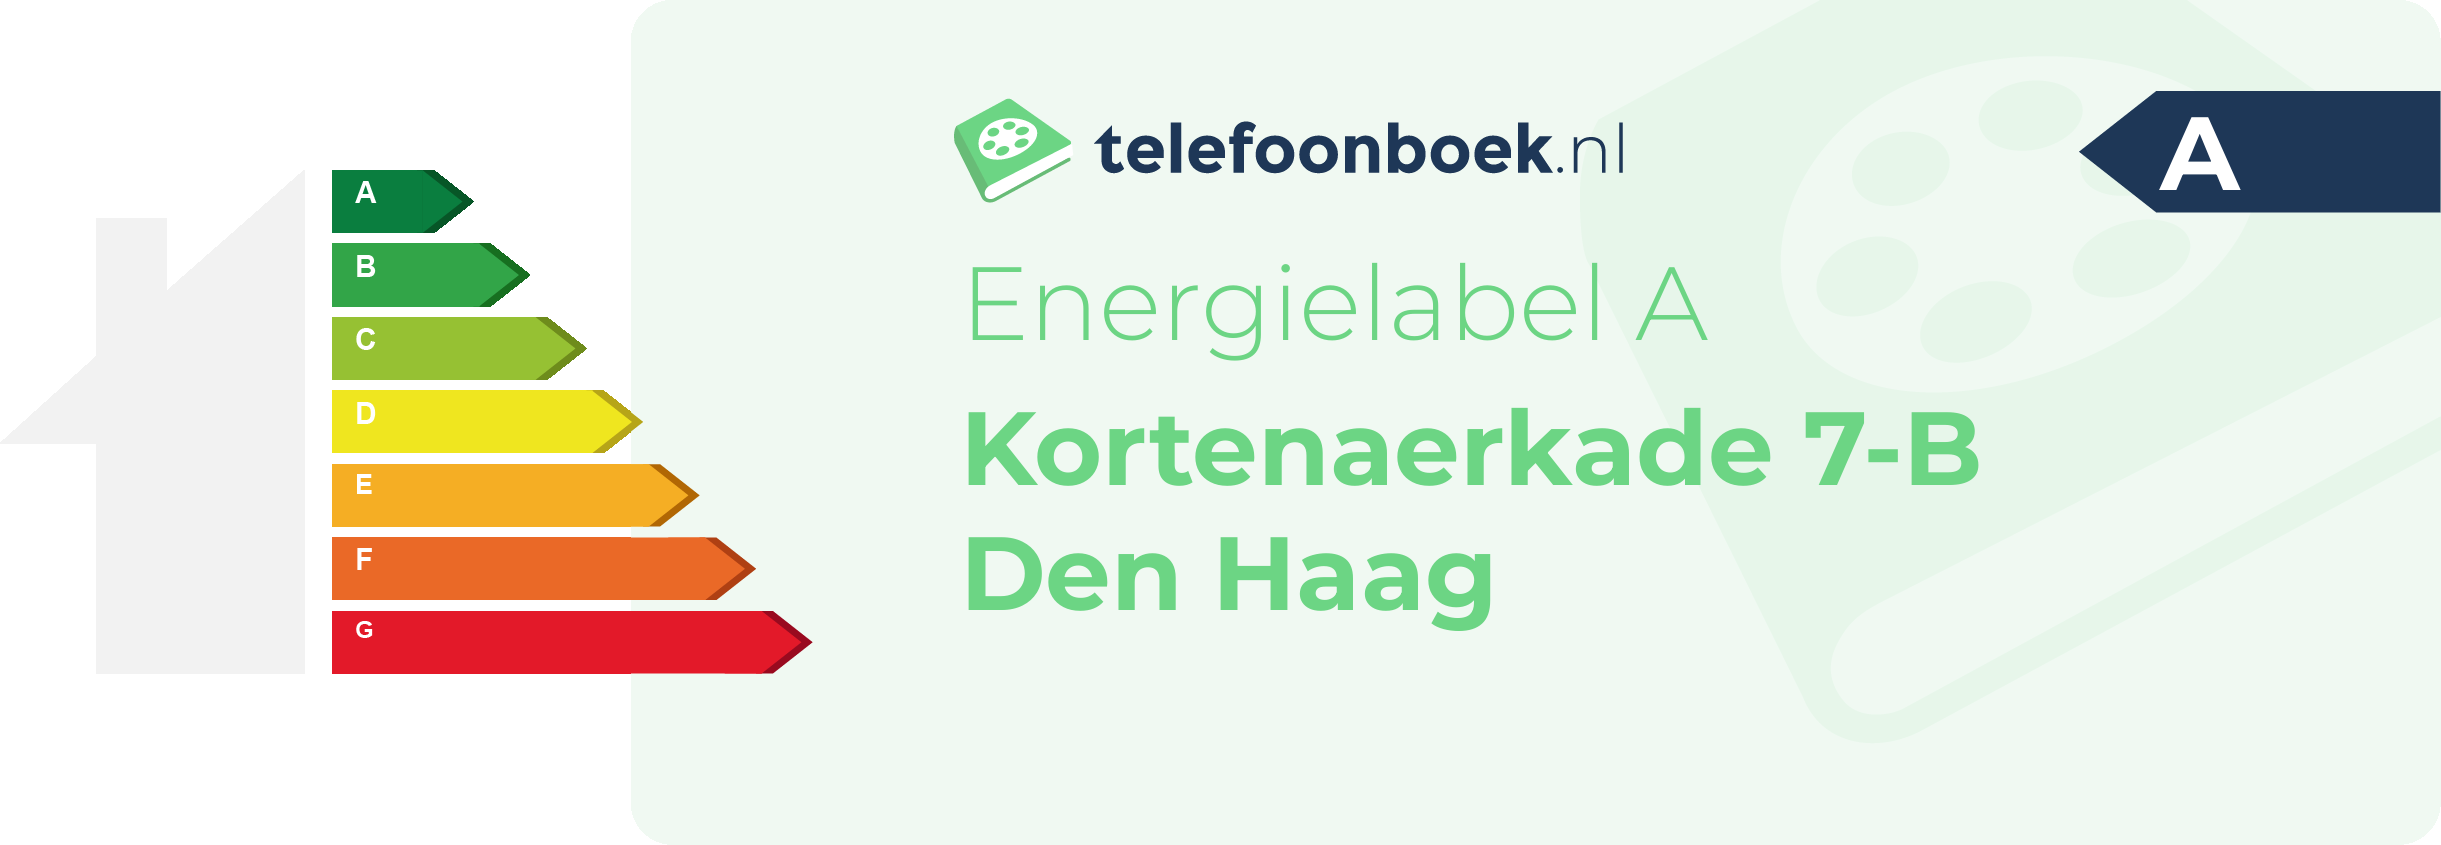 Energielabel Kortenaerkade 7-B Den Haag